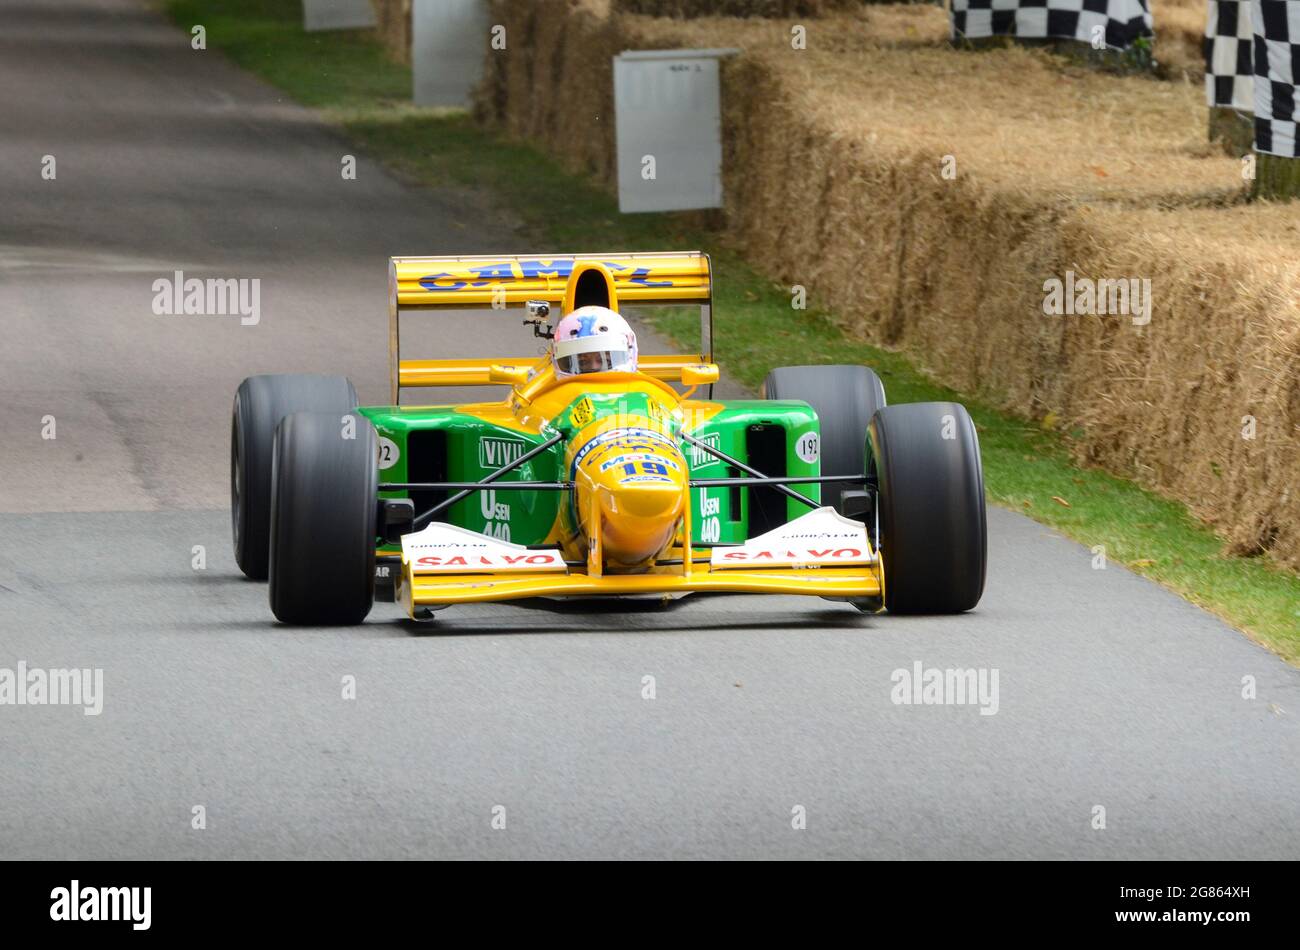 Benetton B192 Formula 1, Grand Prix car. Ex-Michael Schumacher Benetton  Cosworth racing up the hill climb at the Goodwood Festival of Speed 2013  Stock Photo - Alamy